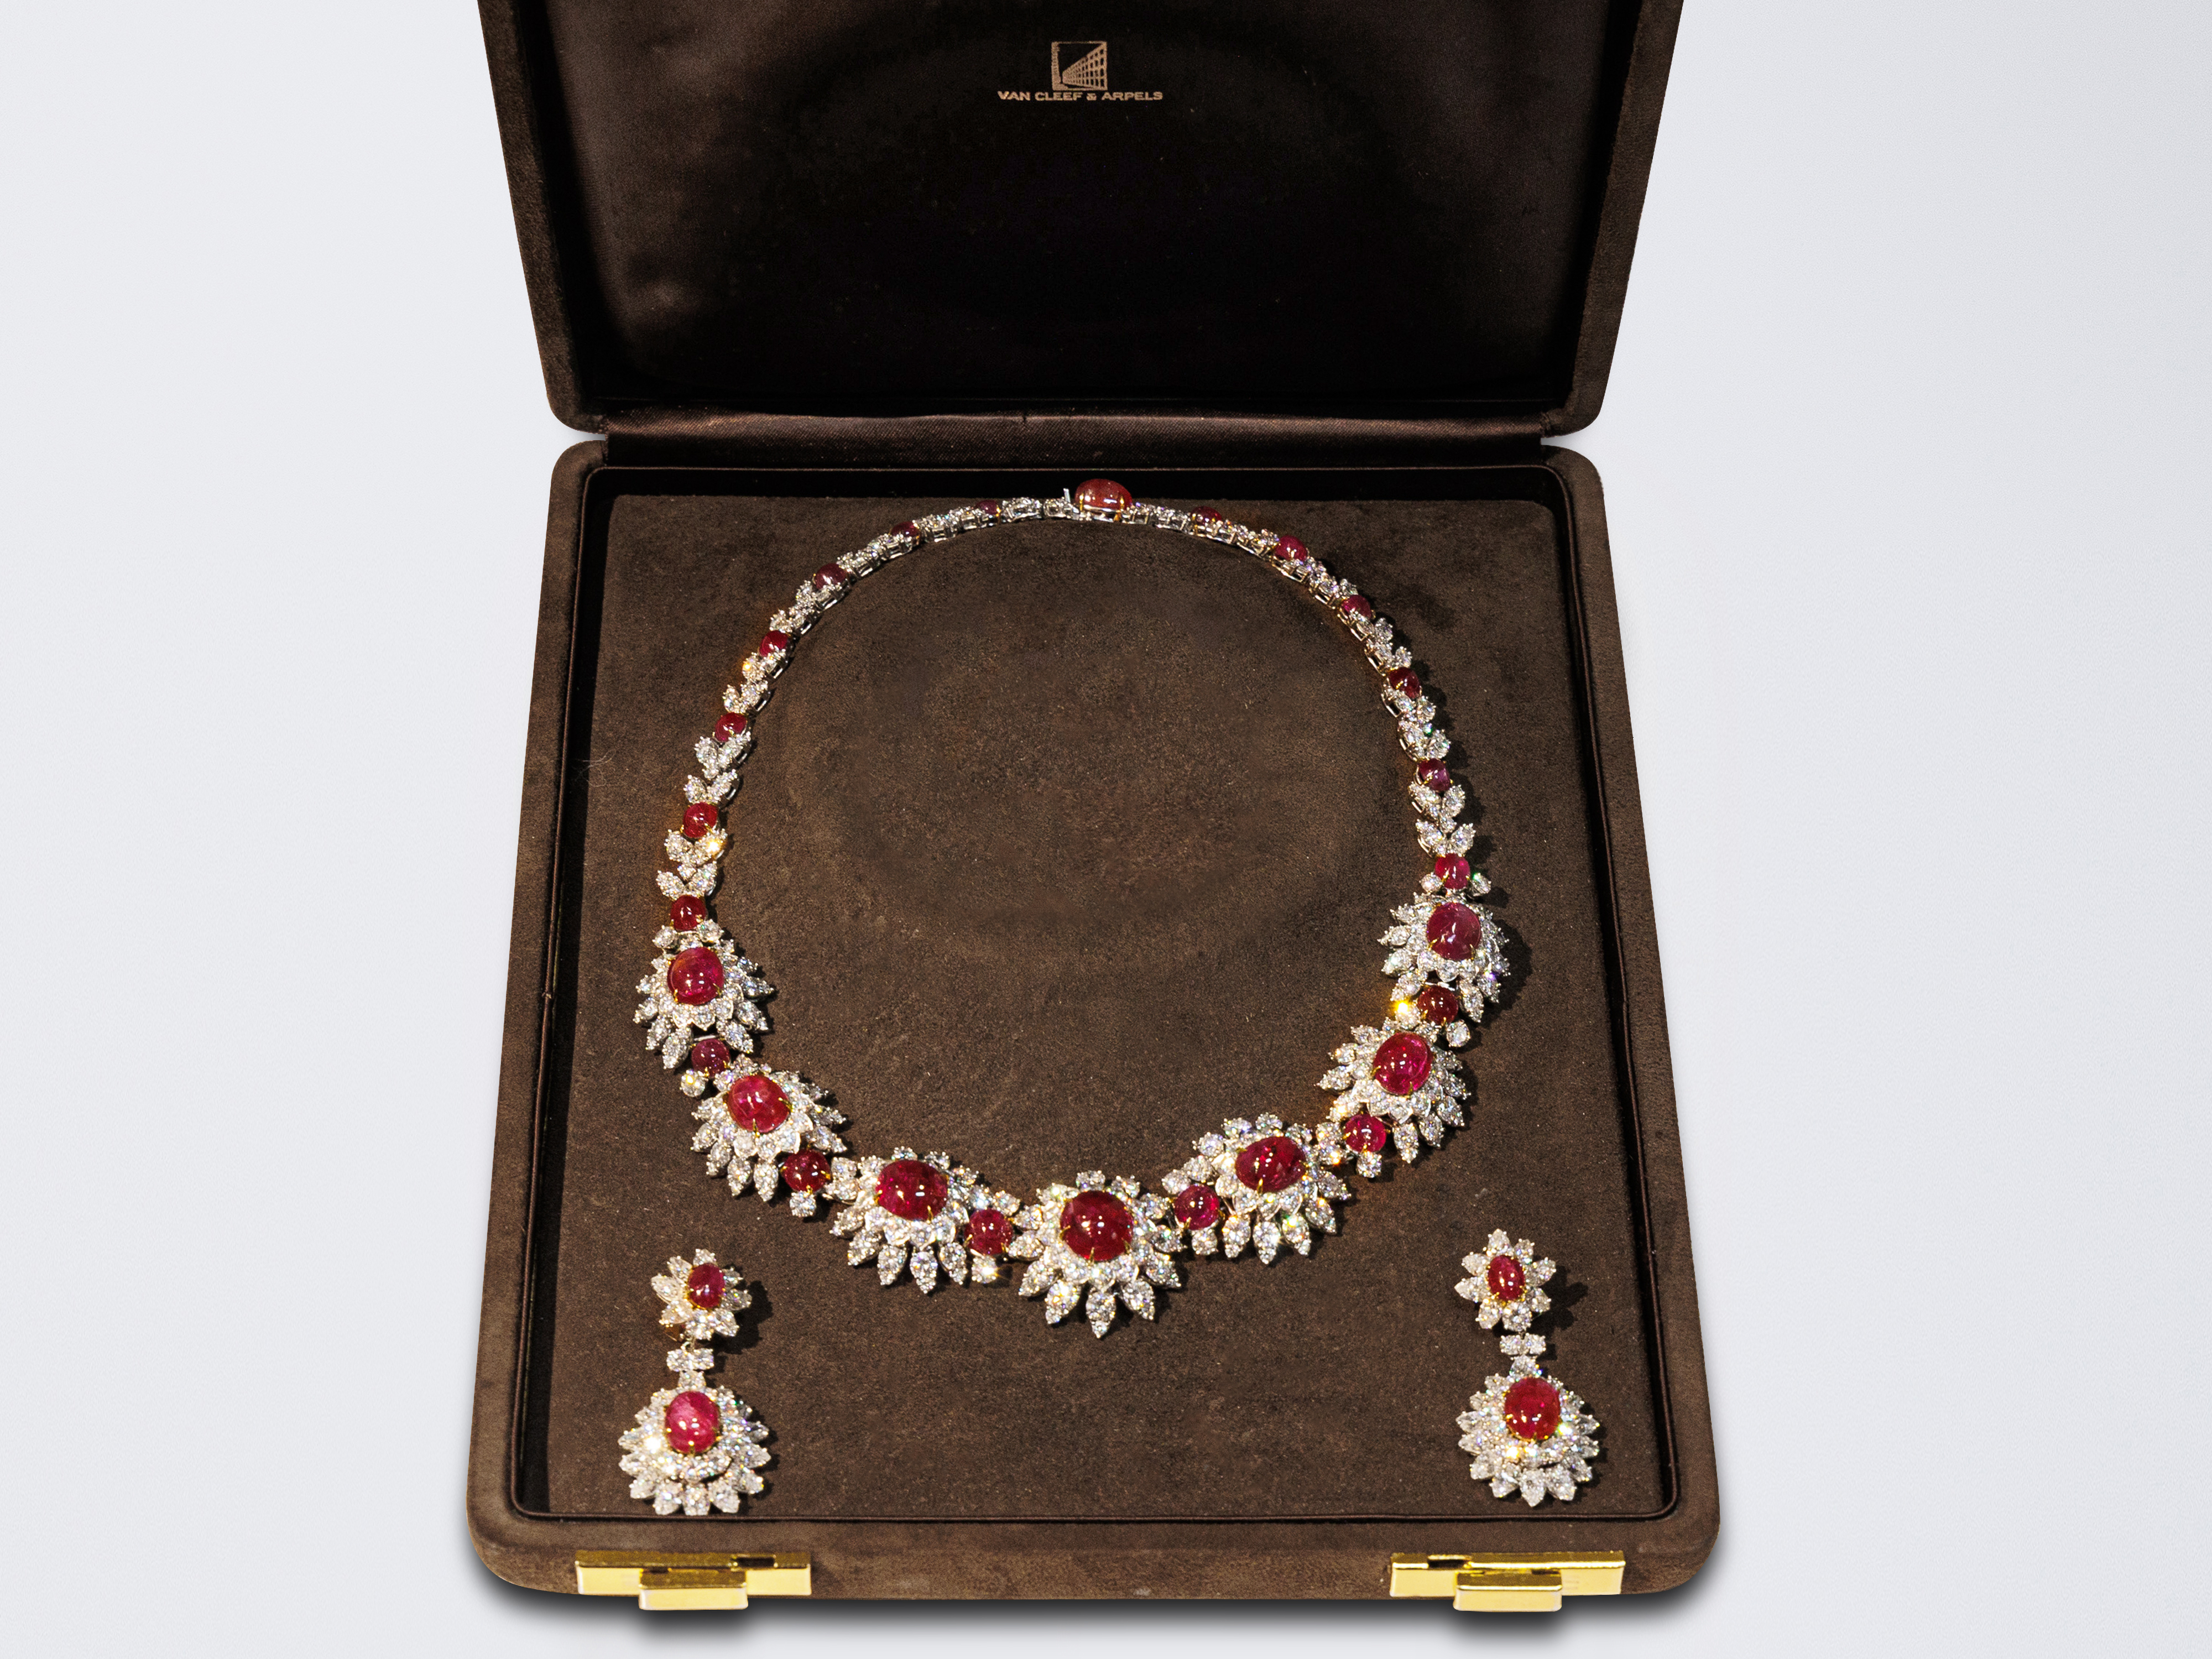 9.Elite Enclave现场展品MarieTom,Roberto Capra 1950年代梵克雅宝签名铂金镶嵌红宝石钻石套装